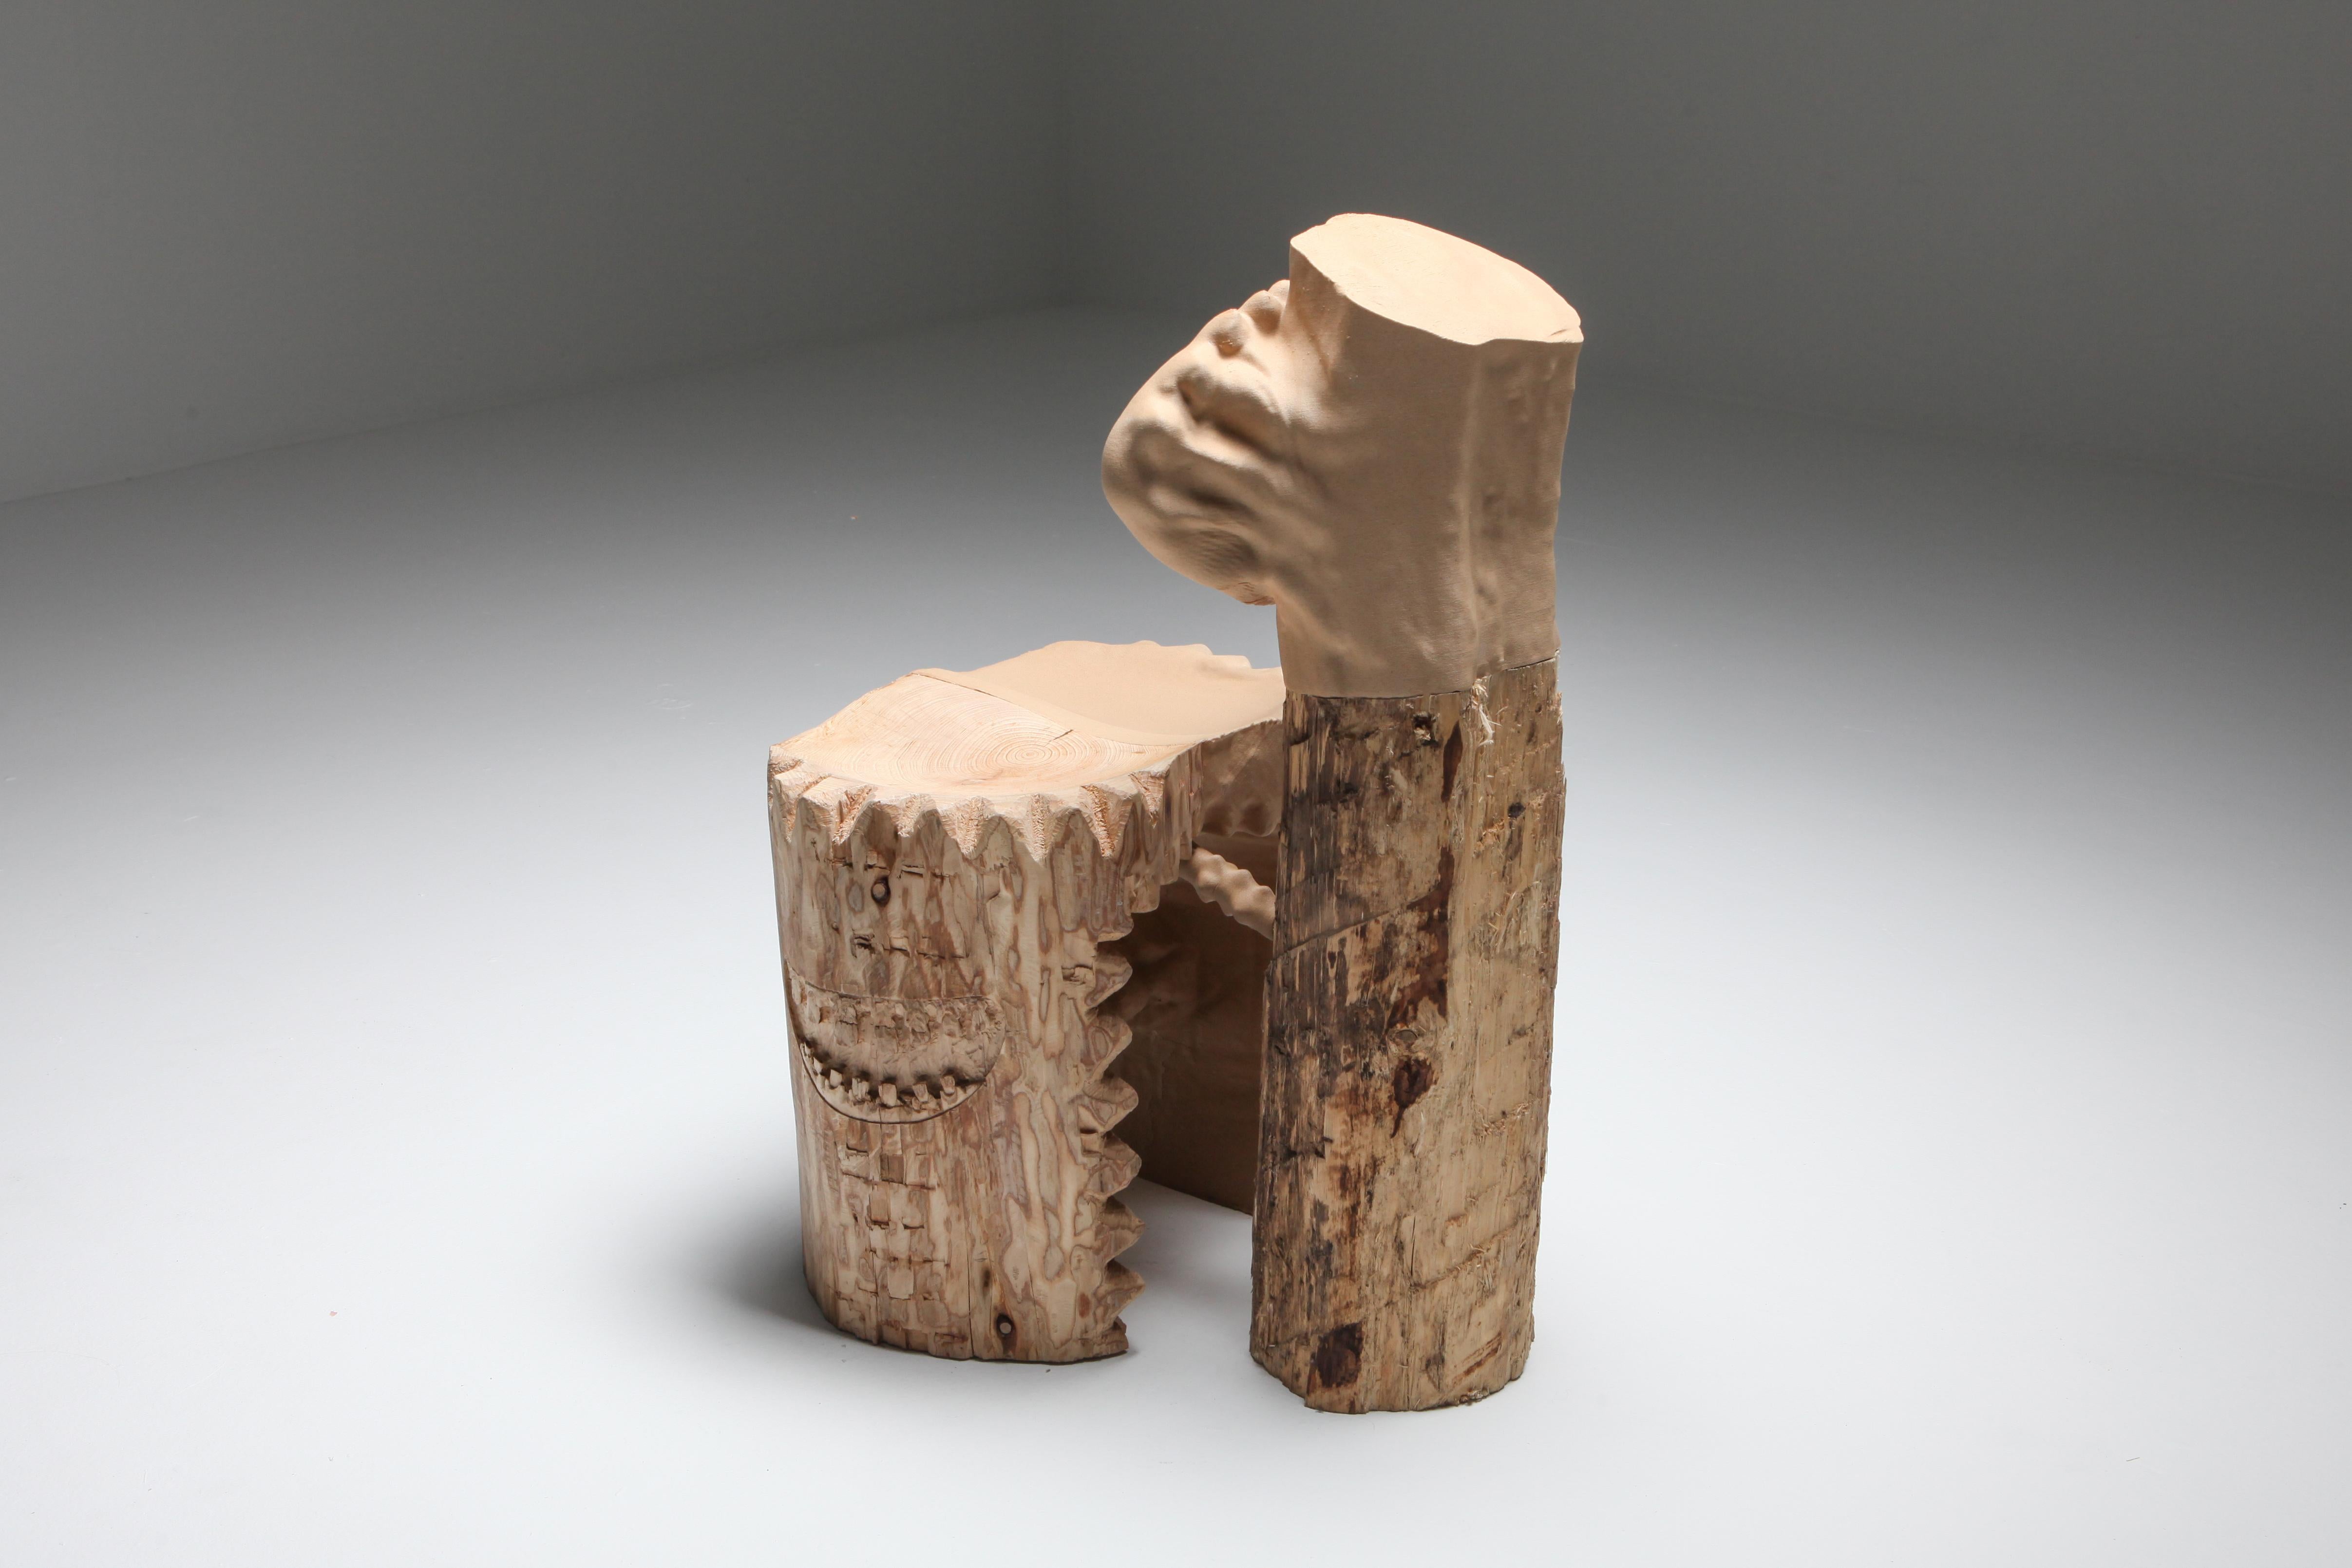 Acrylic 'Echo Stool Teeth' Contemporary Wooden Chair, Schimmel & Schweikle, 2020